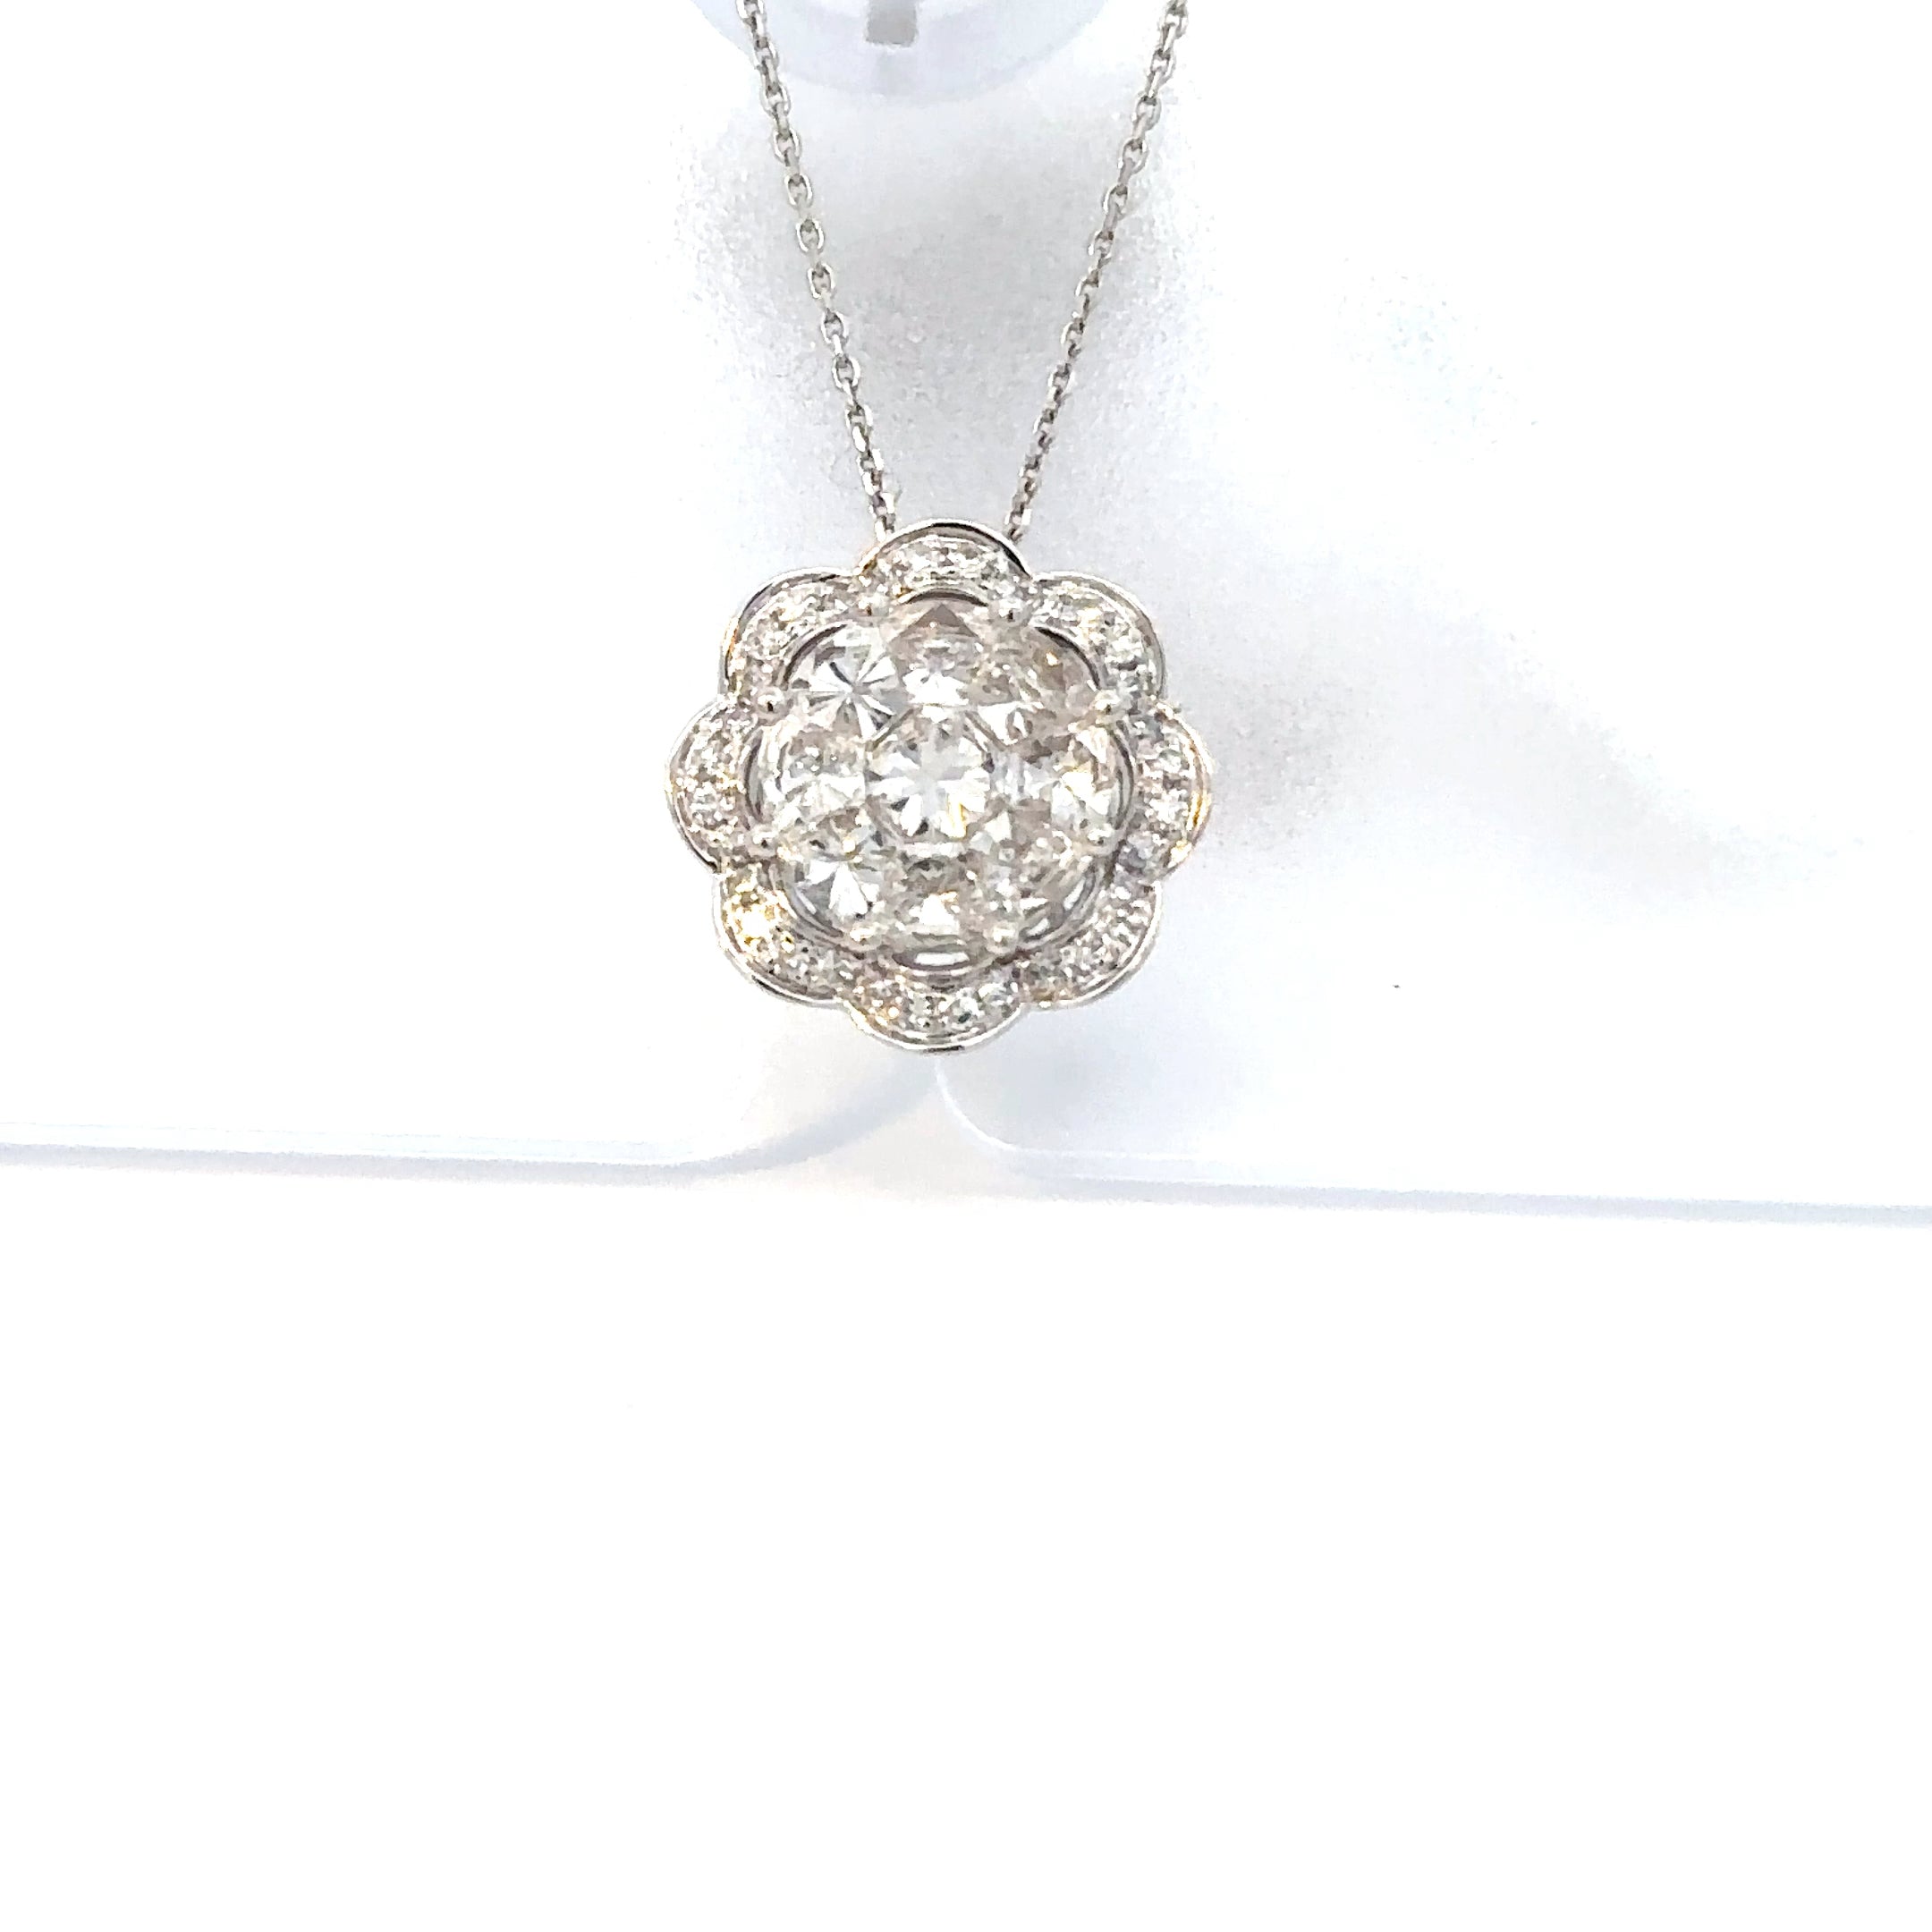 Sparkling Elegance: Princess Cut Diamond Pendant in 18K White Gold